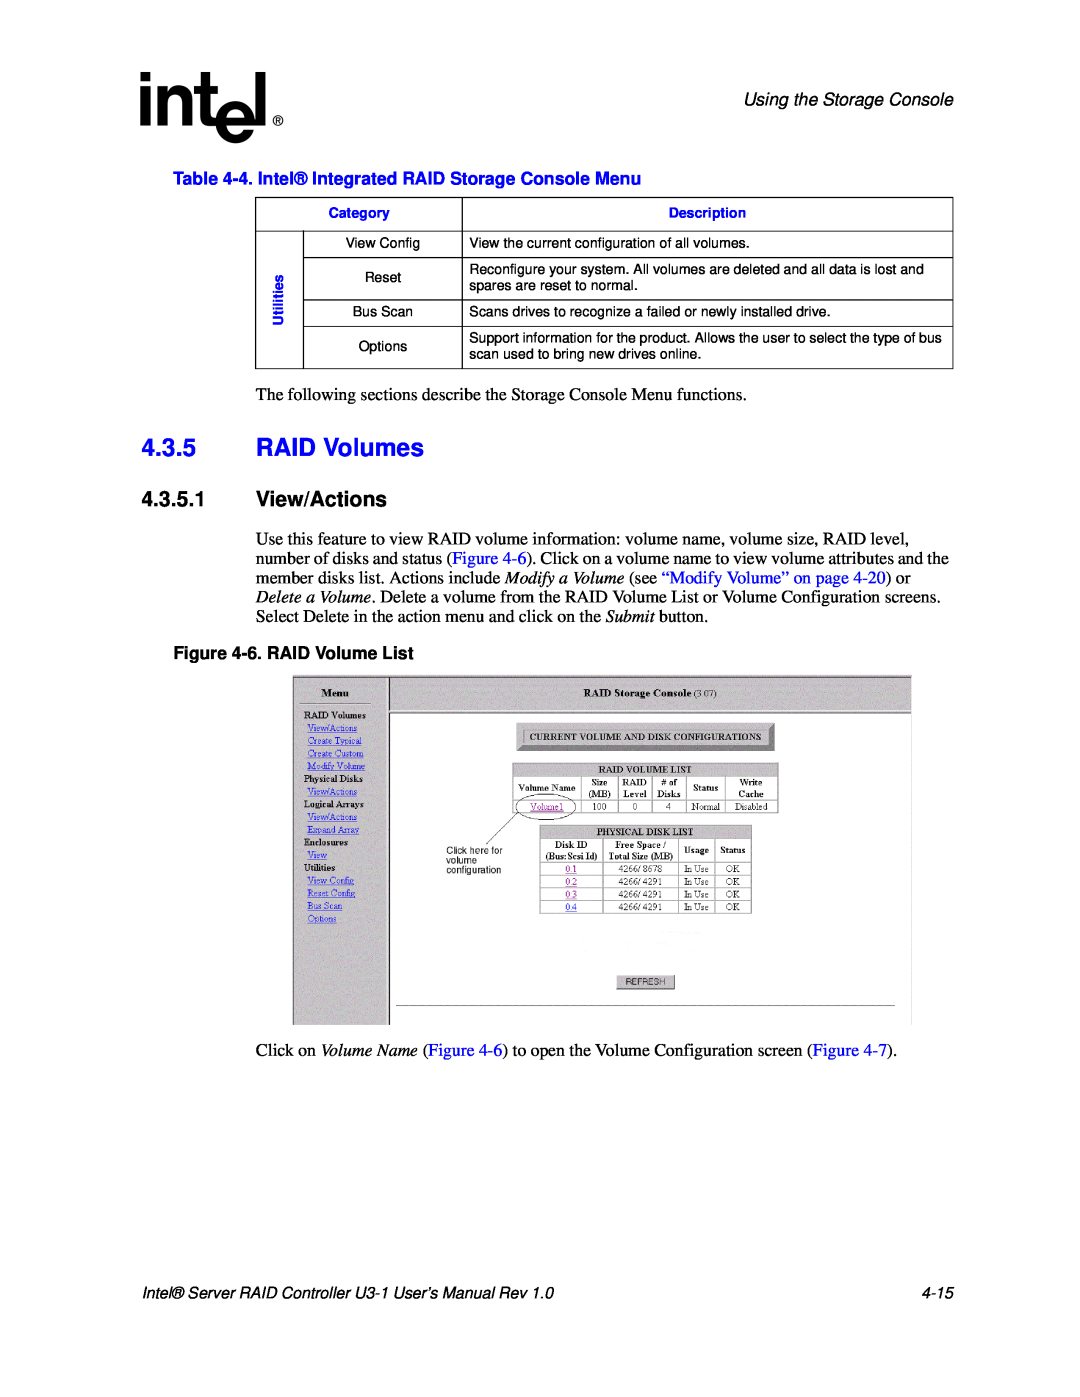 Intel SRCU31 user manual 4.3.5RAID Volumes, 4.3.5.1View/Actions, Using the Storage Console, 6.RAID Volume List 